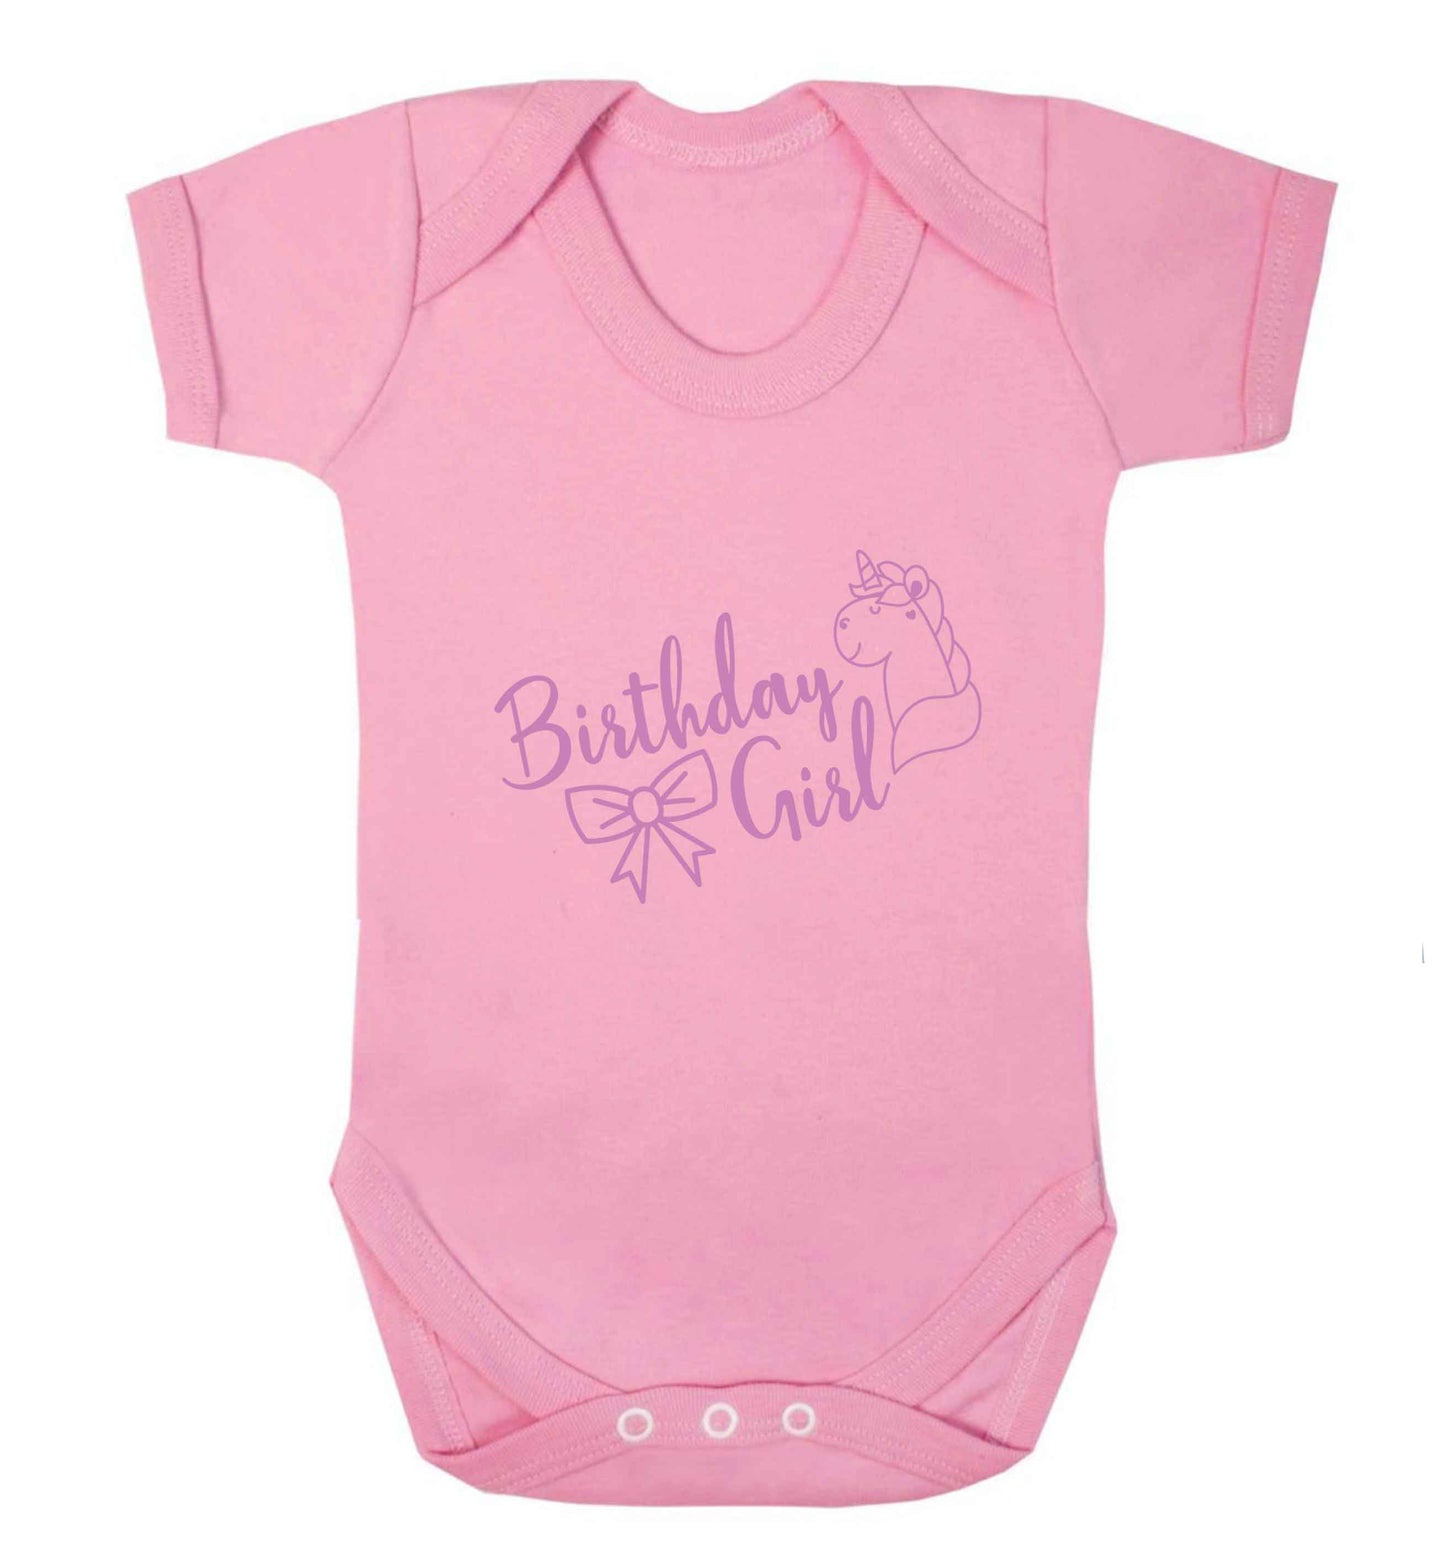 Birthday girl baby vest pale pink 18-24 months